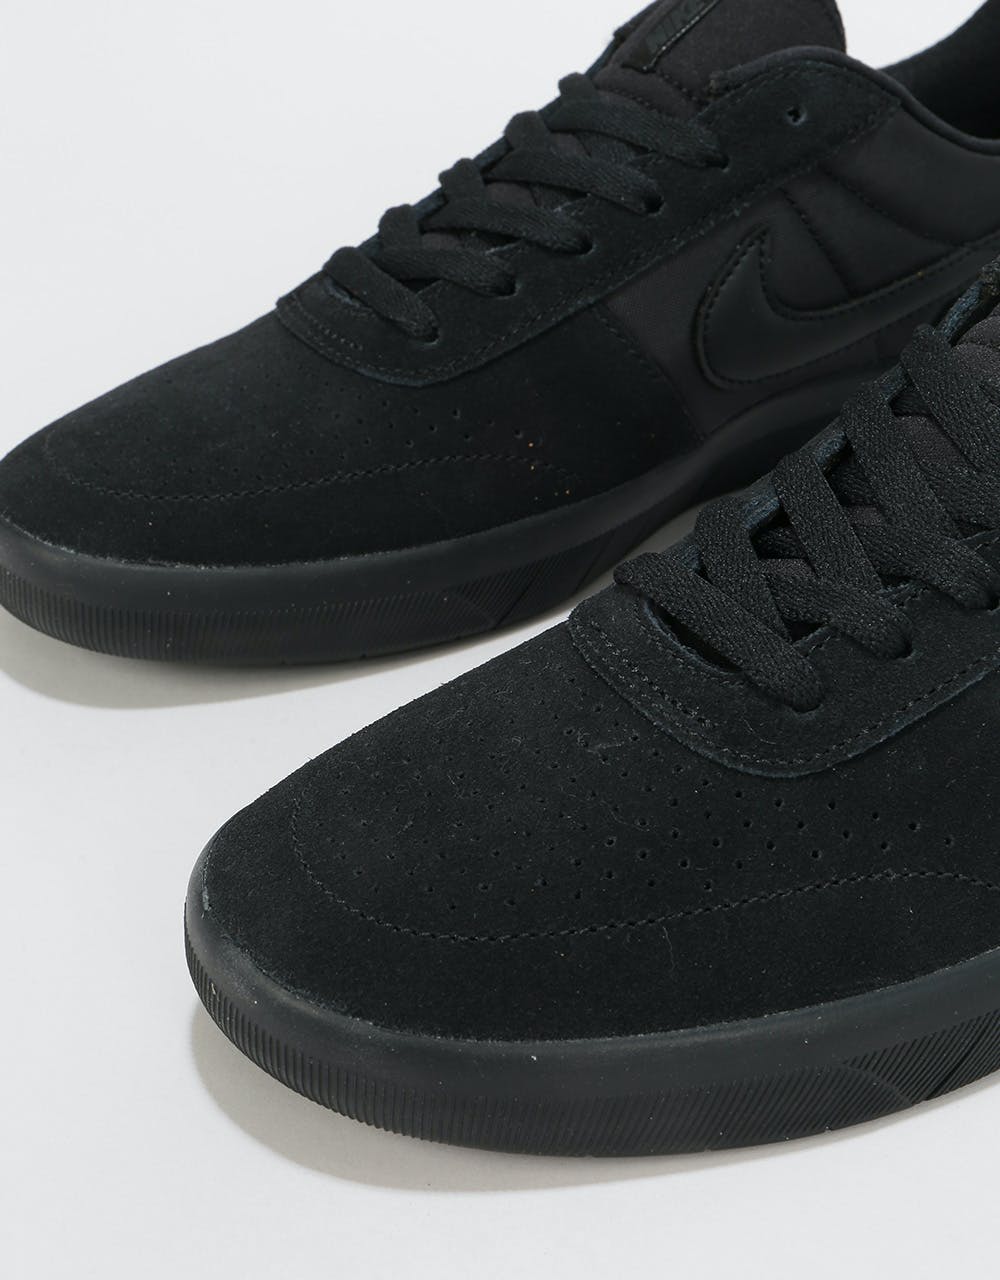 Nike SB Team Classic Skate Shoes - Black/Black-Anthracite